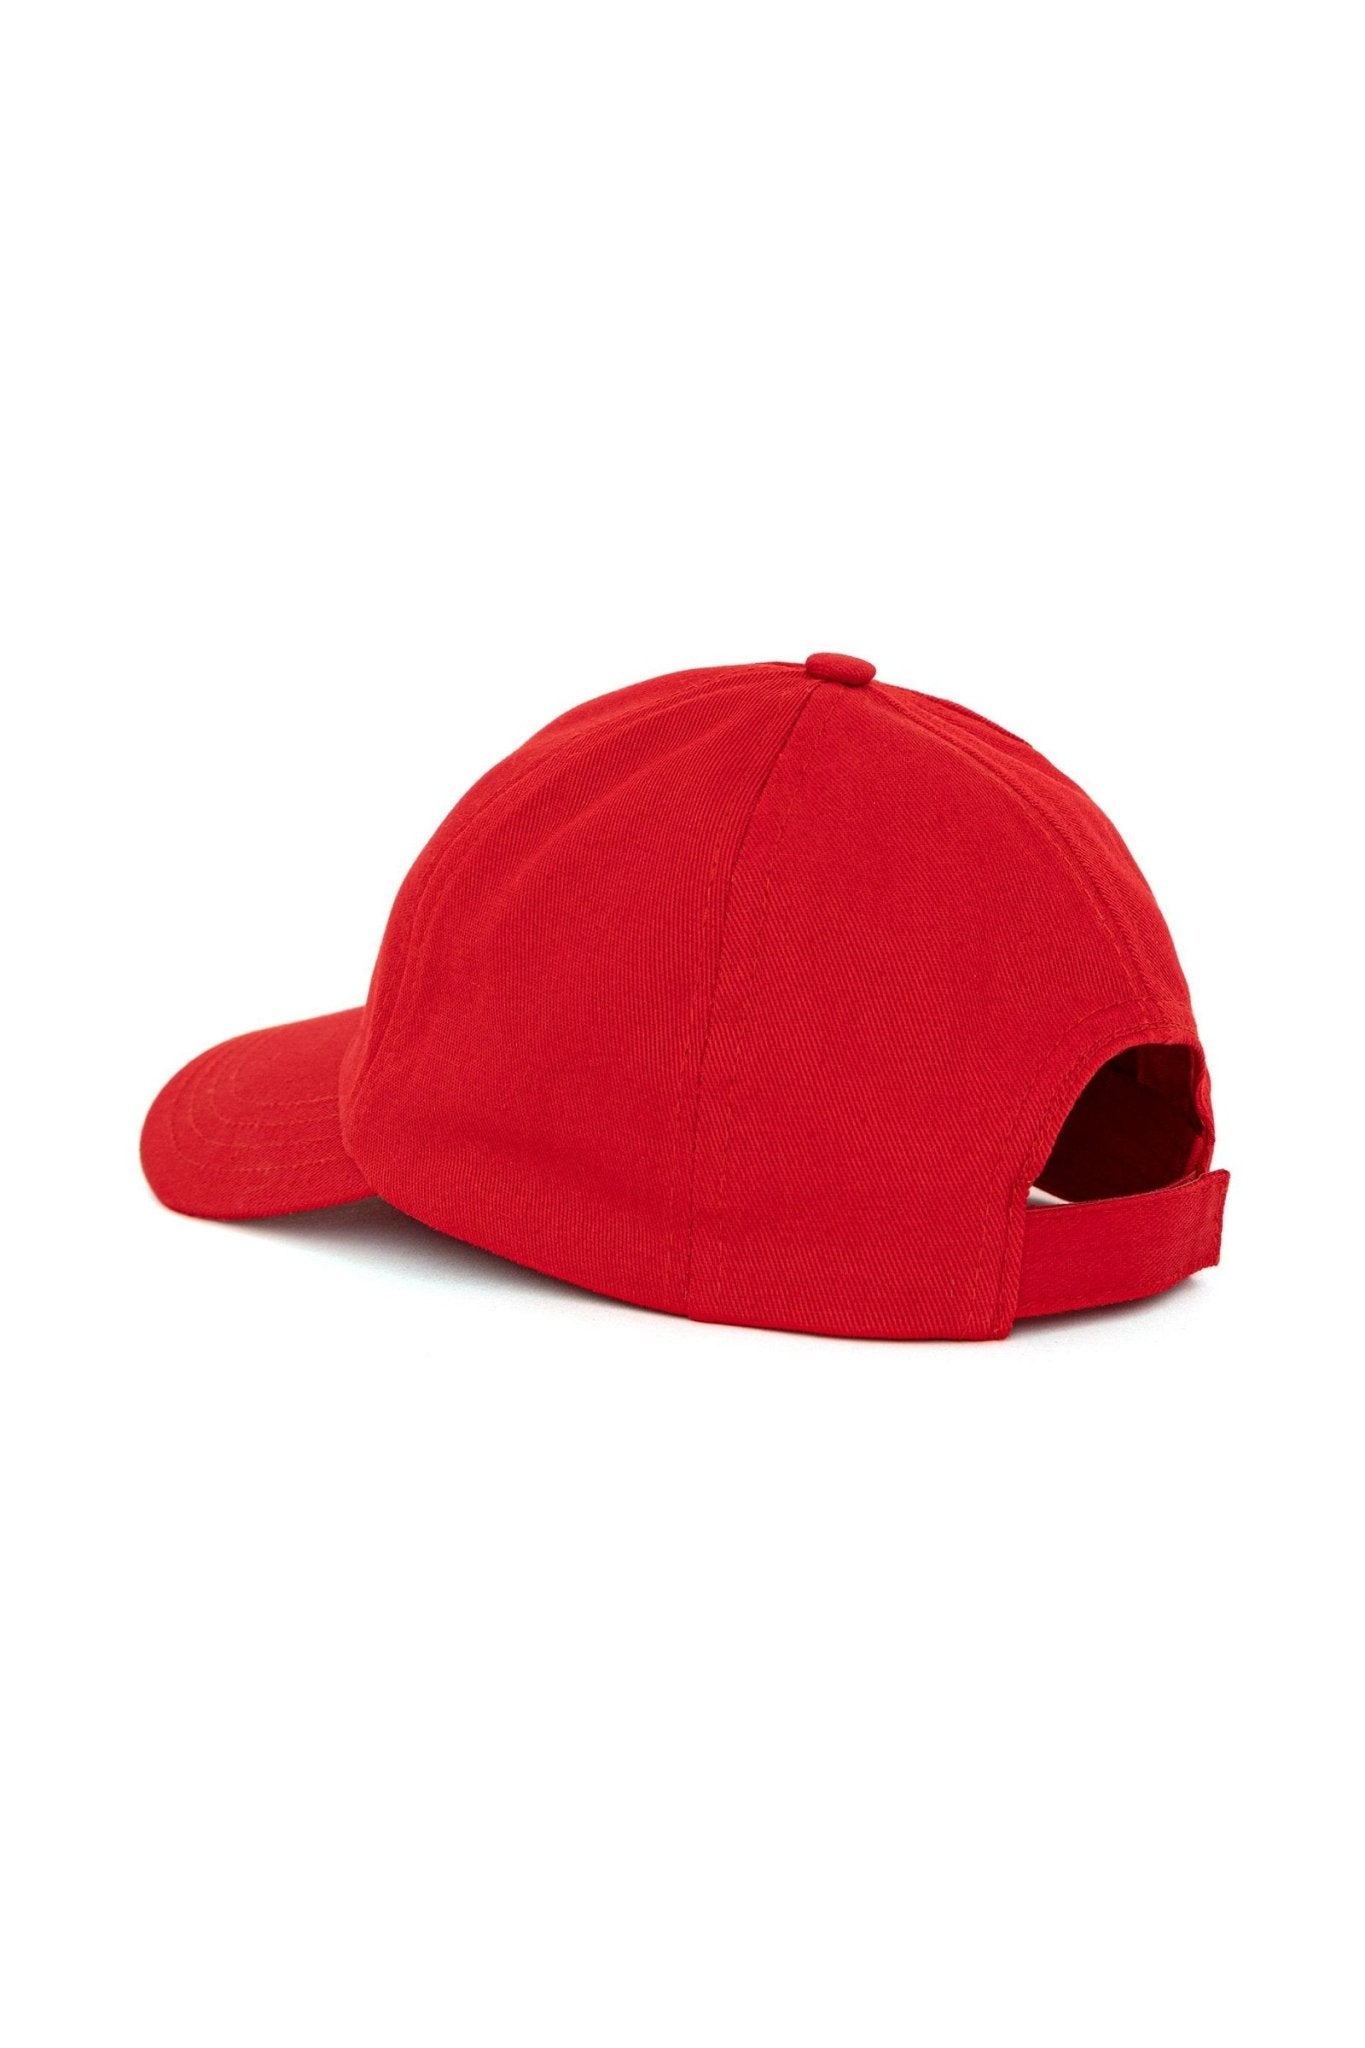 USPA Men's Red Hat